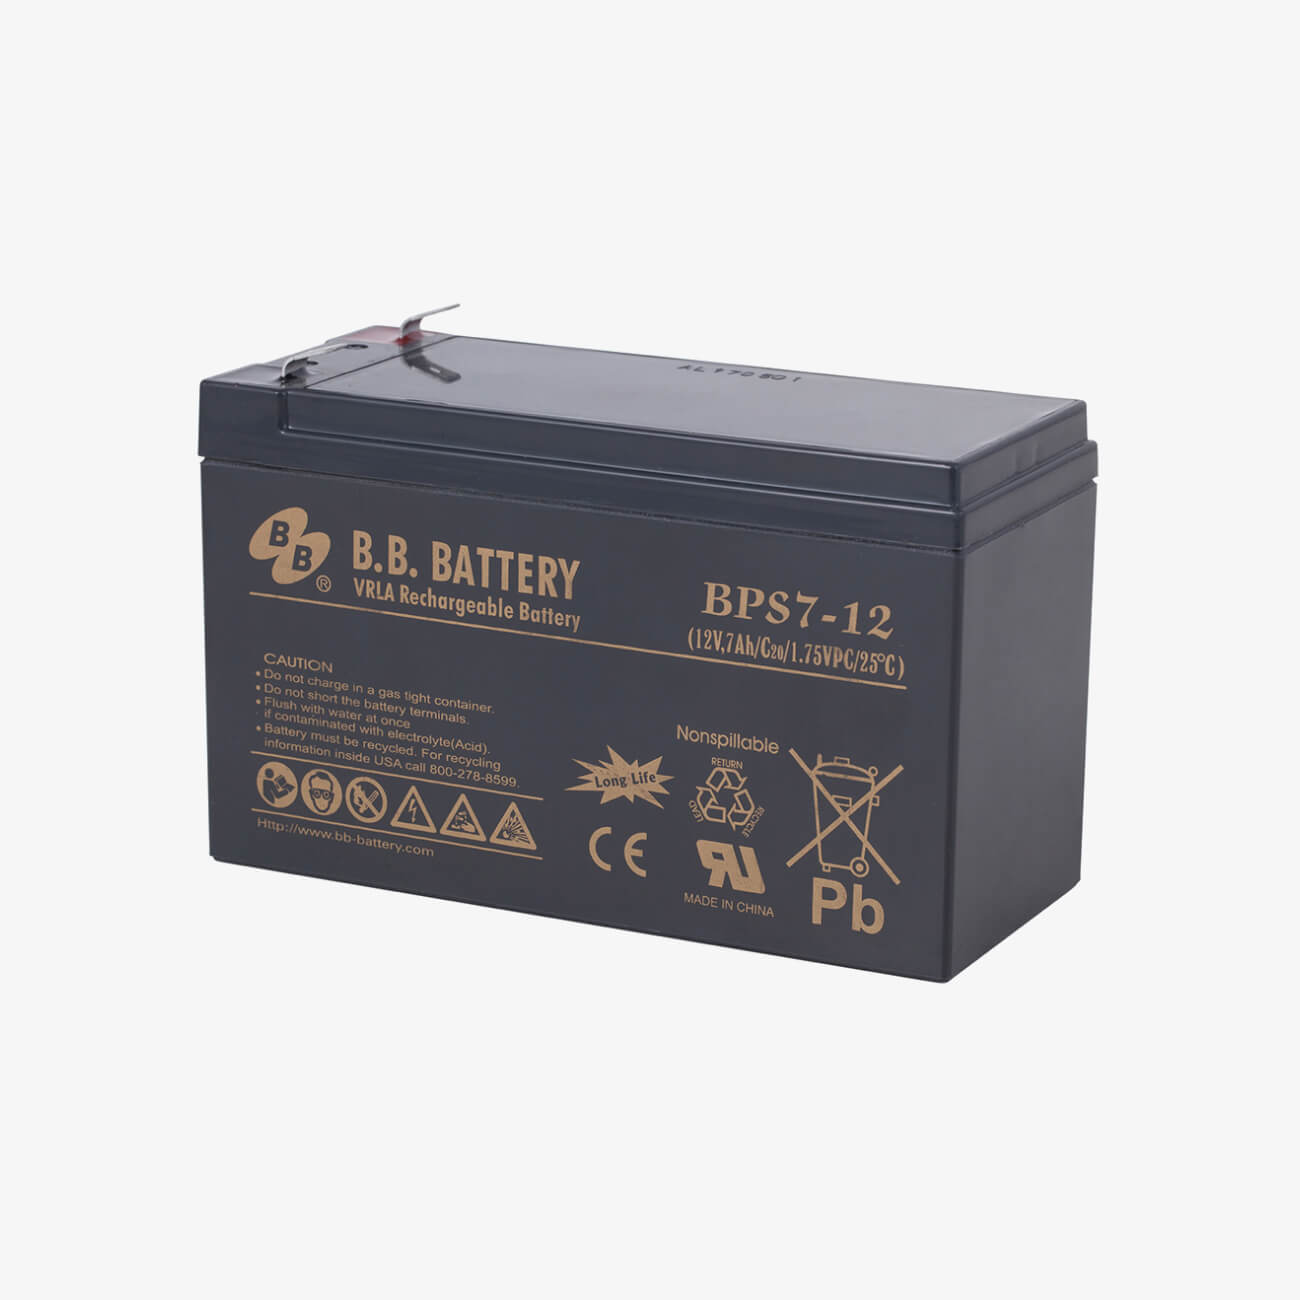 B b battery. BB Battery SHR 10-12. Батарея b.b. Battery hr9-6. Батарея для ИБП BB BPS 7-12. Аккумулятор BB Battery HRL 75-12.